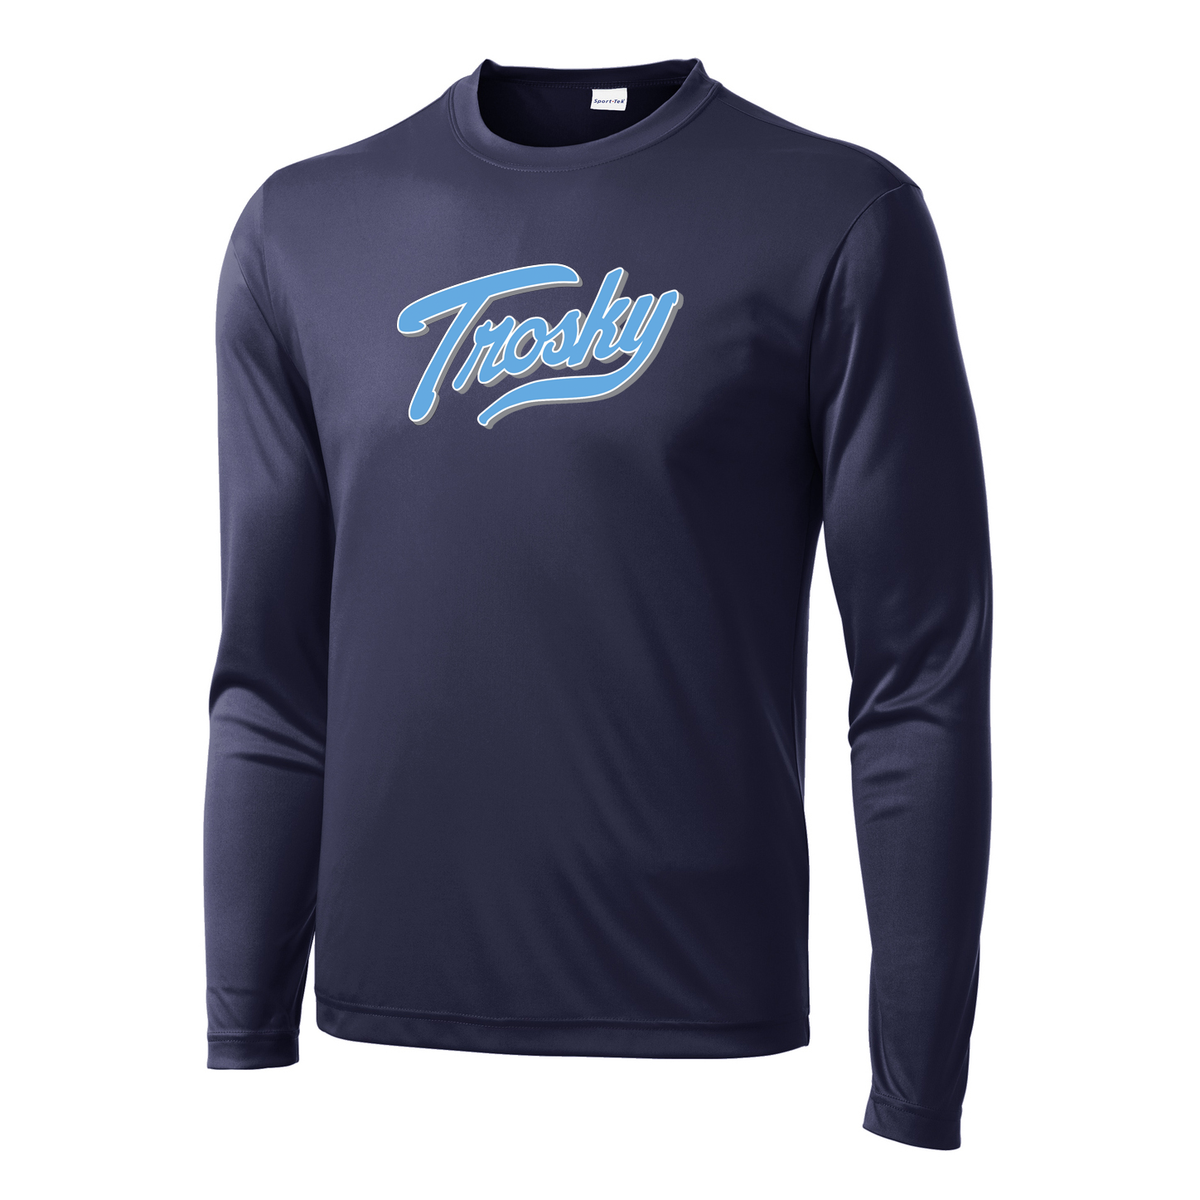 Trosky Baseball Long Sleeve Performance Shirt